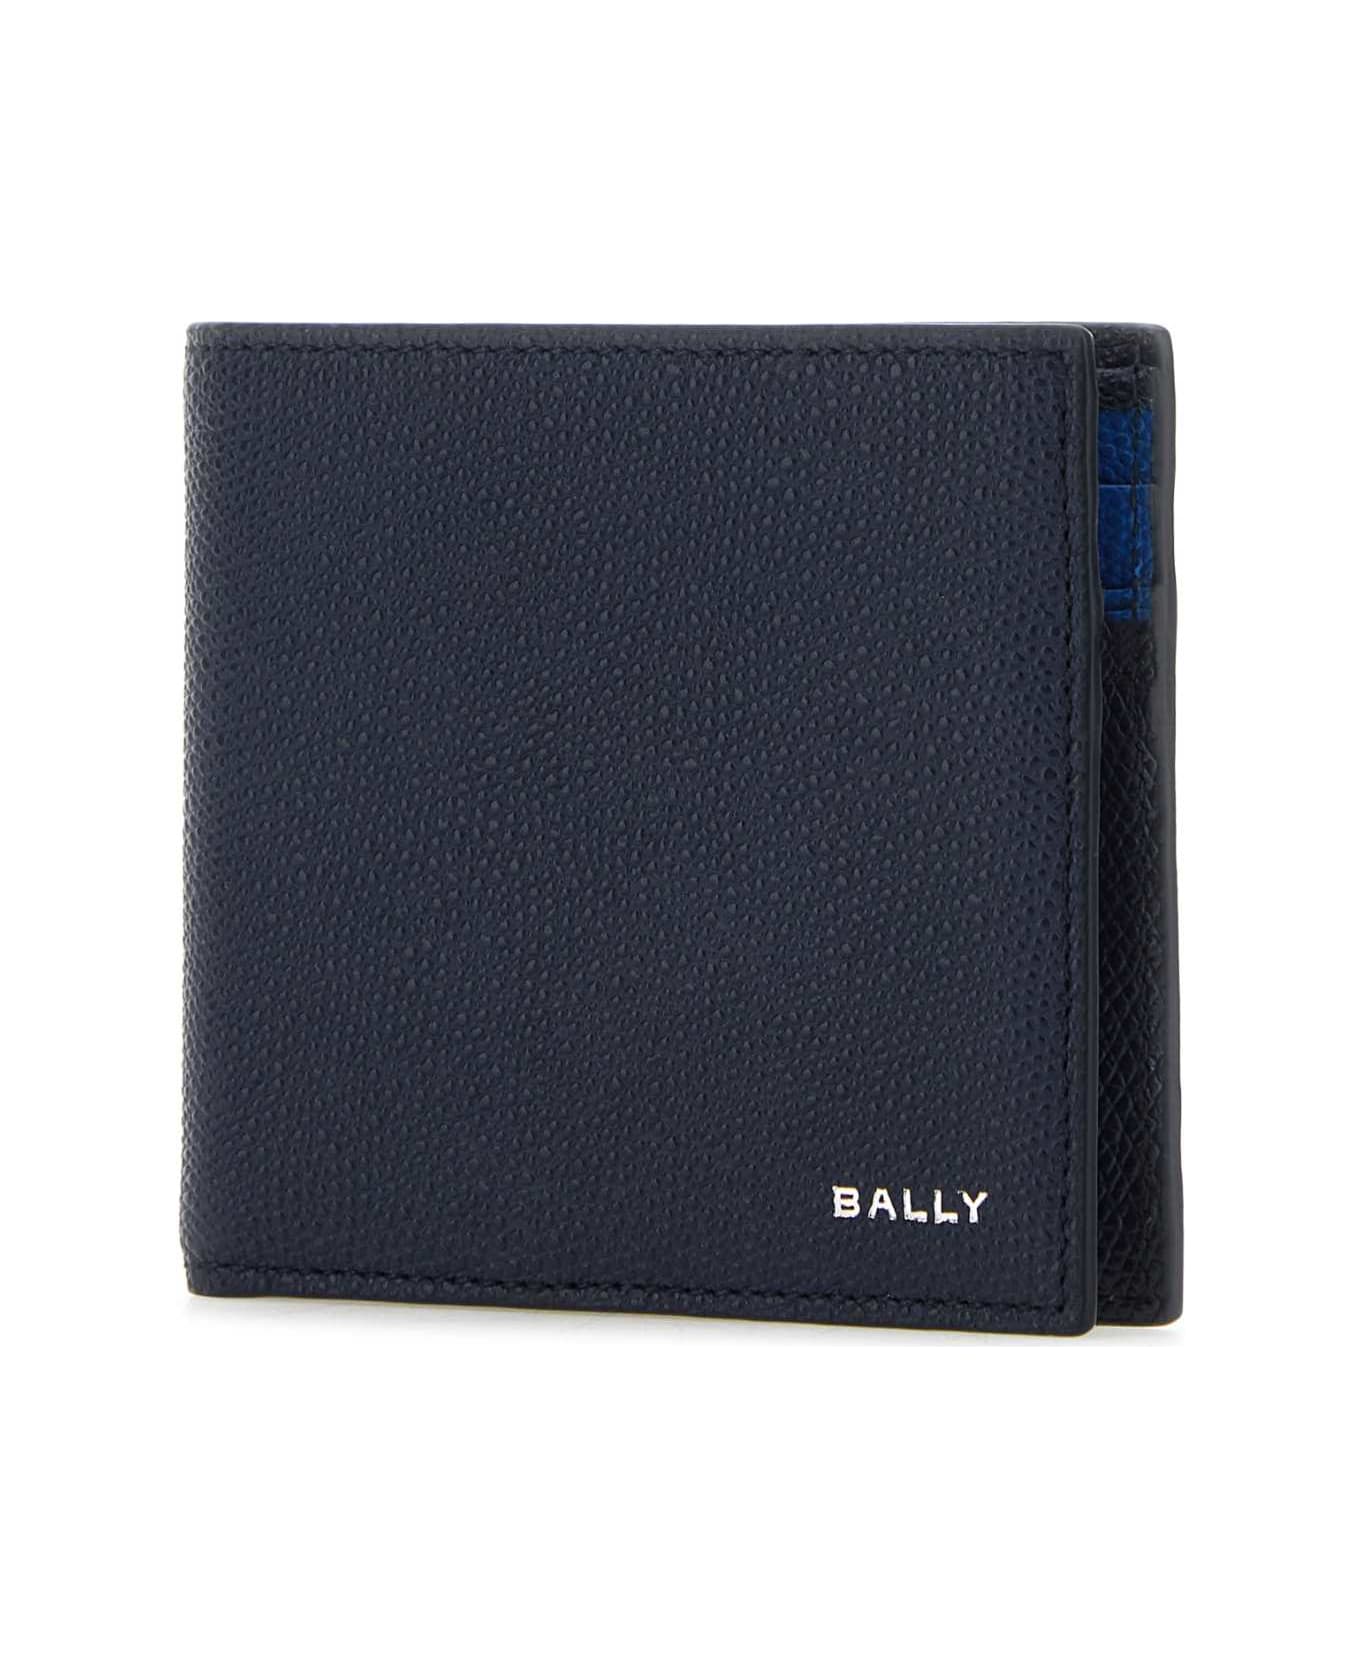 Bally Slate Leather Flag Wallet - MARINEBALEINEPAL 財布